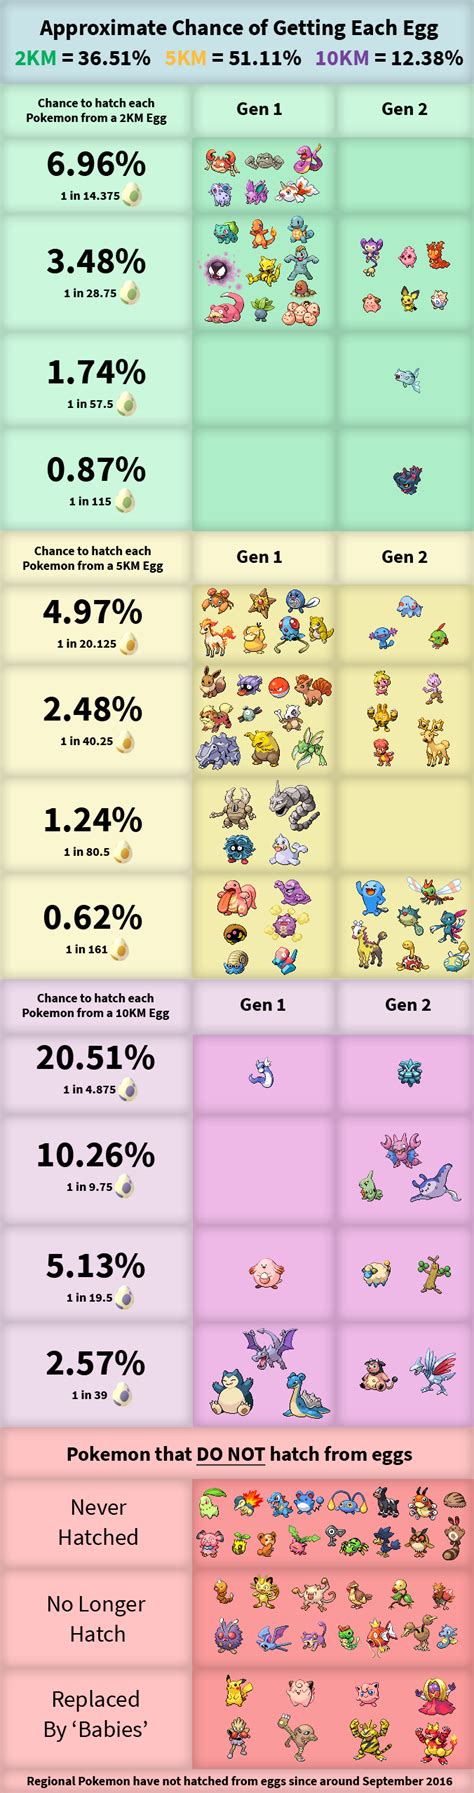 Pokémon Go Egg Chart Gen 2 Update Hatch Rates For 2km 5km And 10km